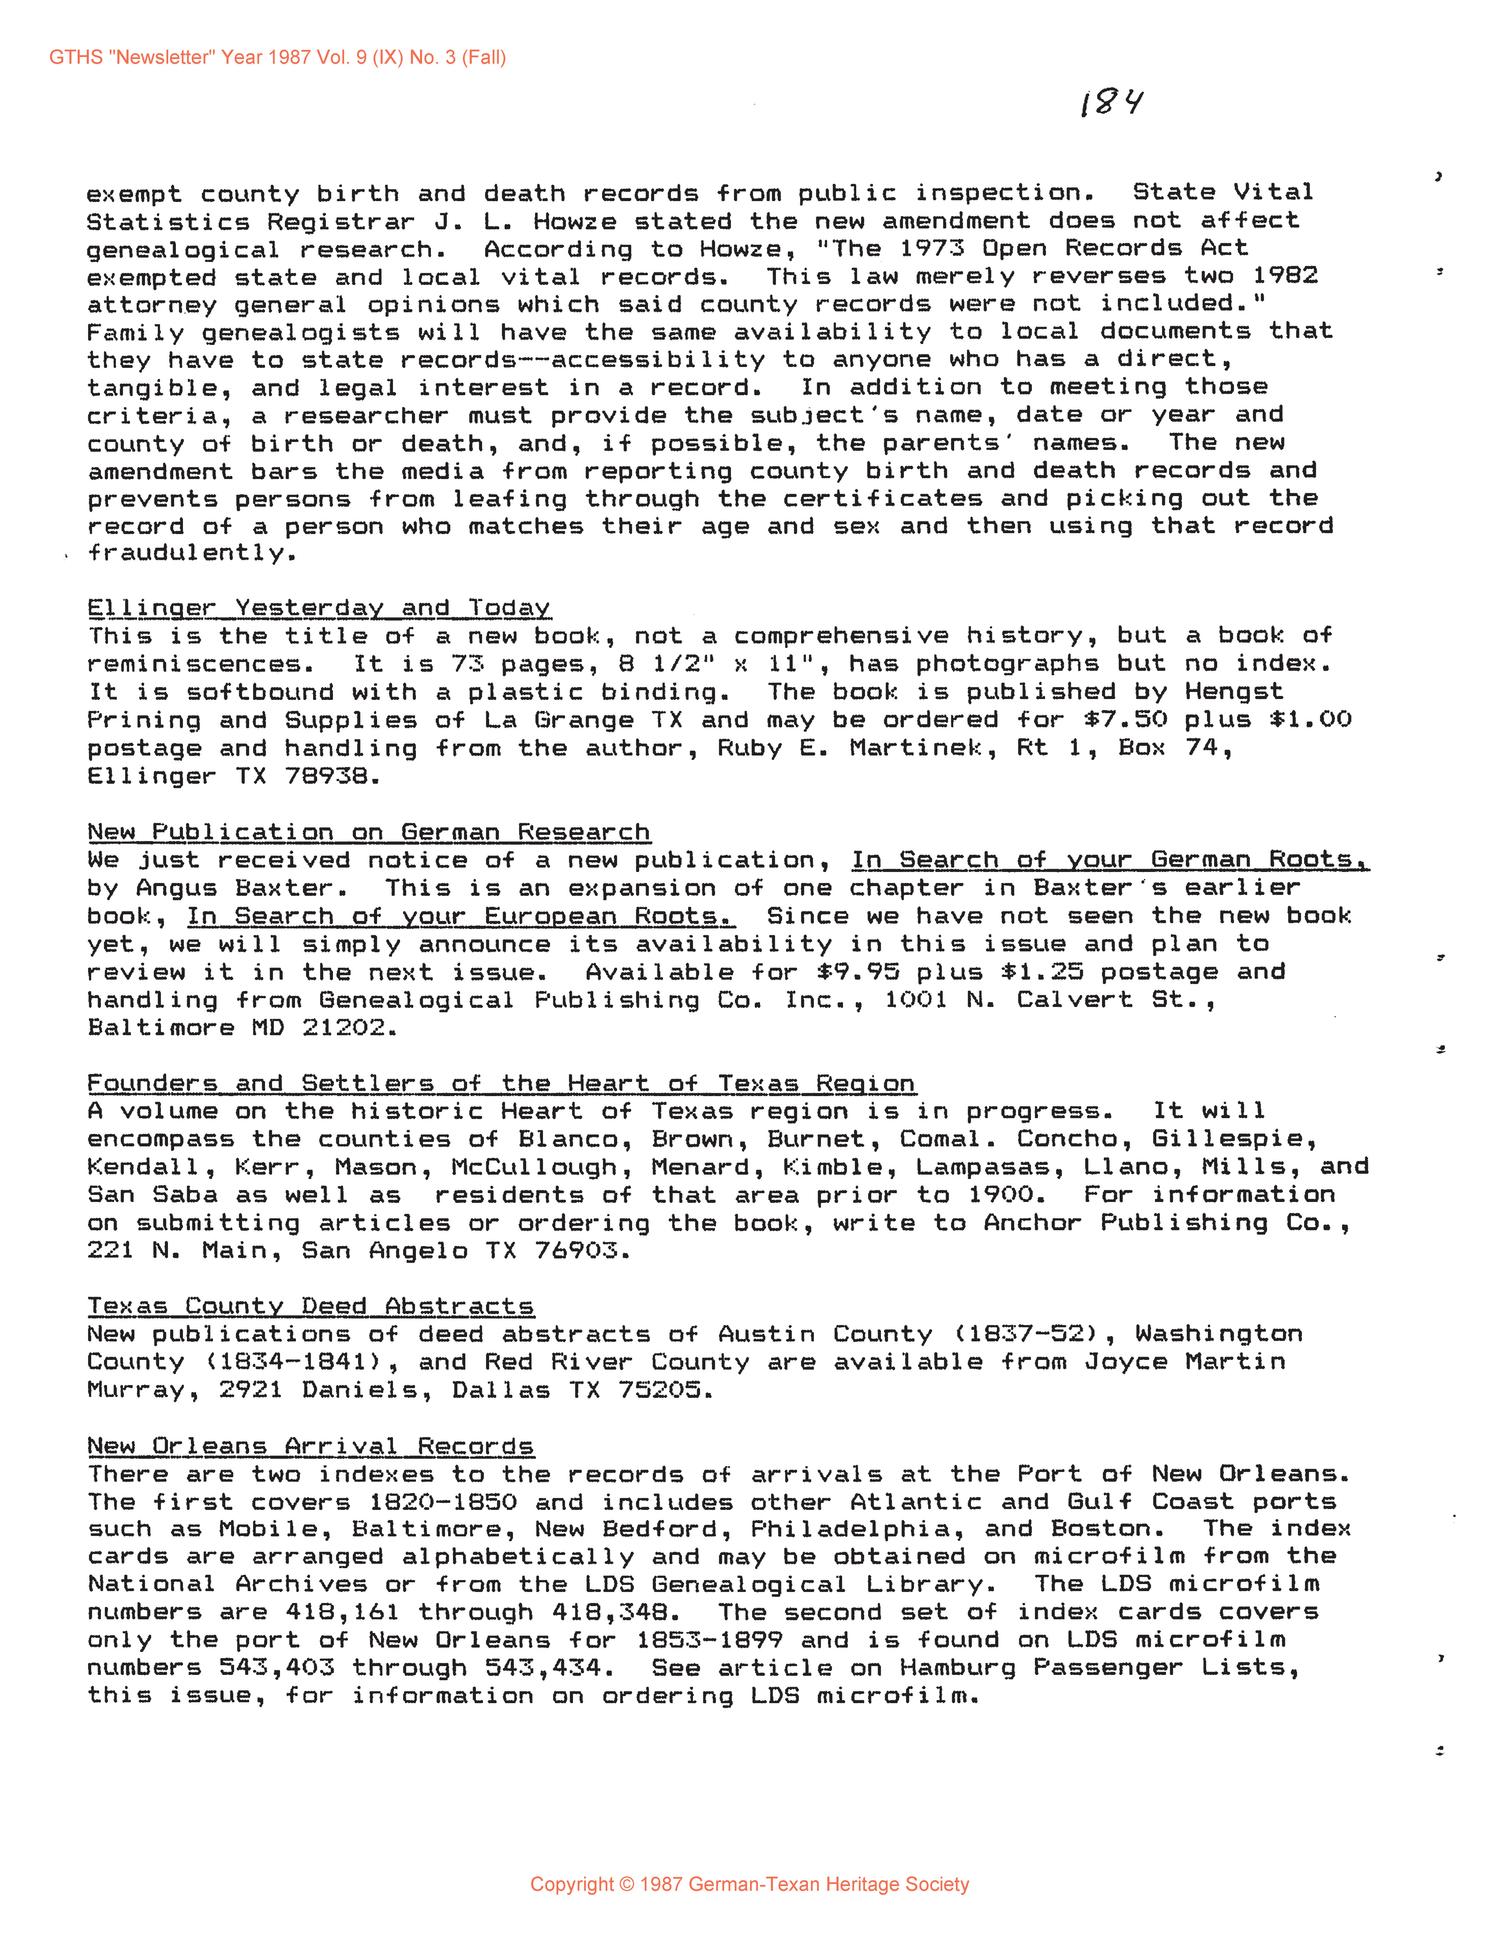 German-Texan Heritage Society Newsletter, Volume 9, Number 3, Fall 1987
                                                
                                                    184
                                                